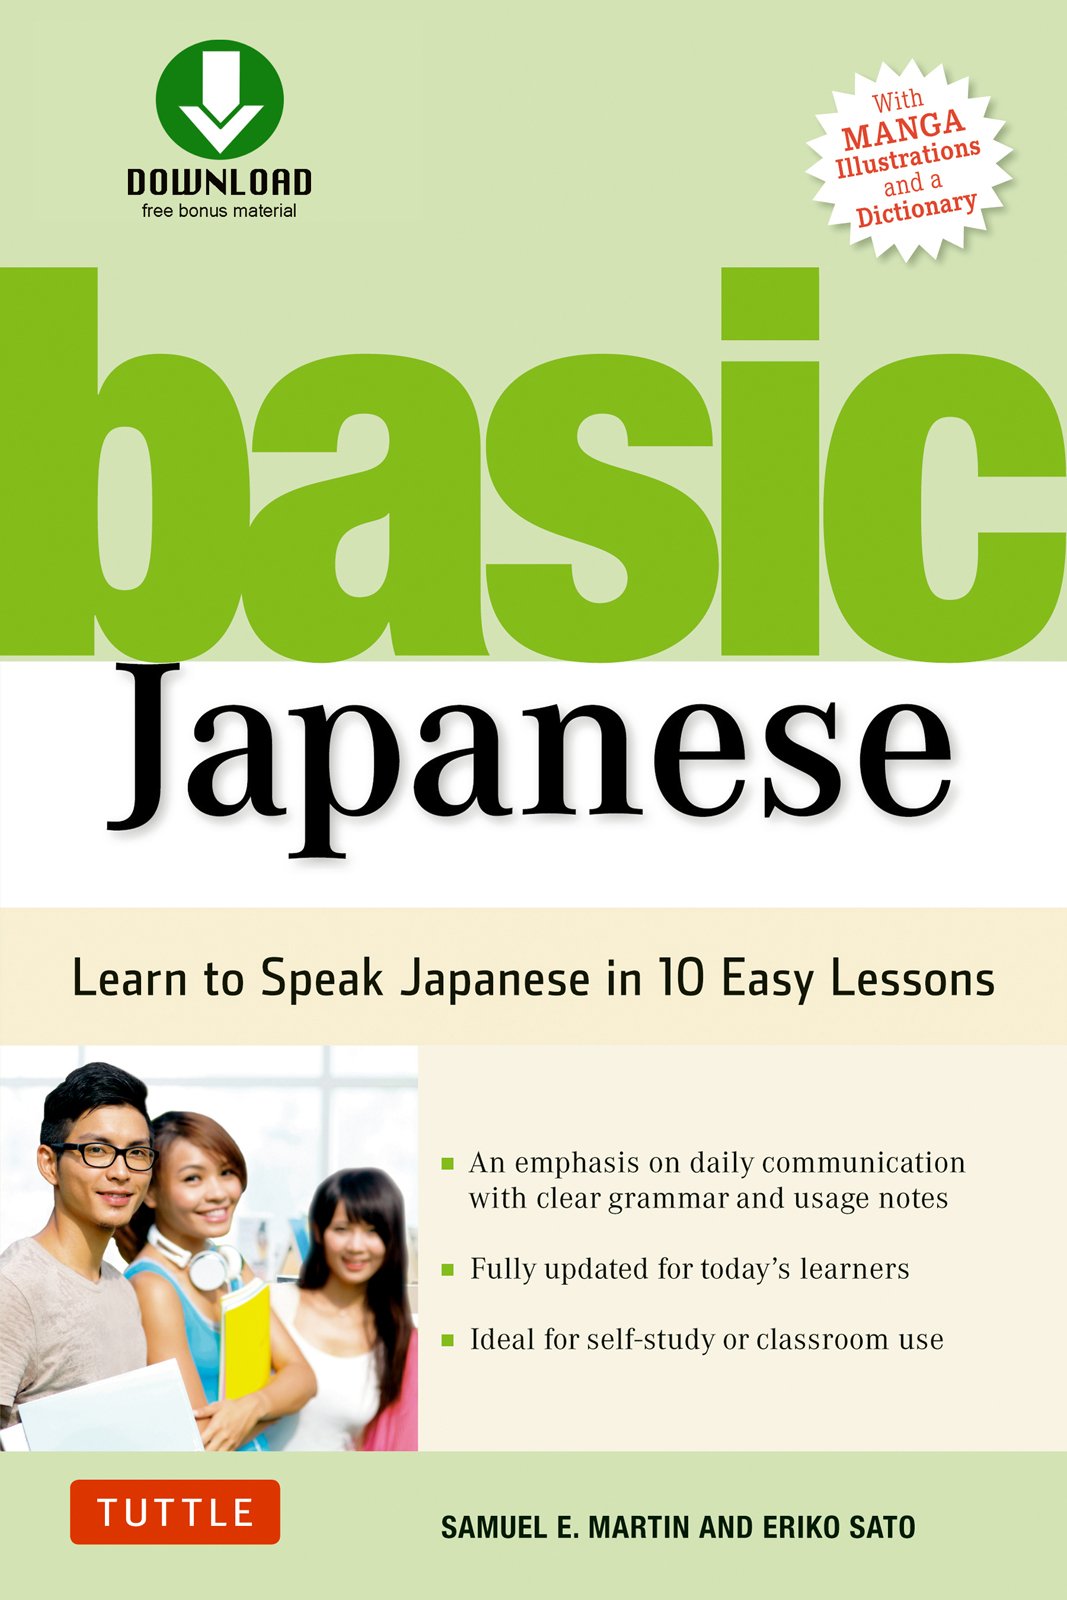 learning to speak japanese for beginners adio